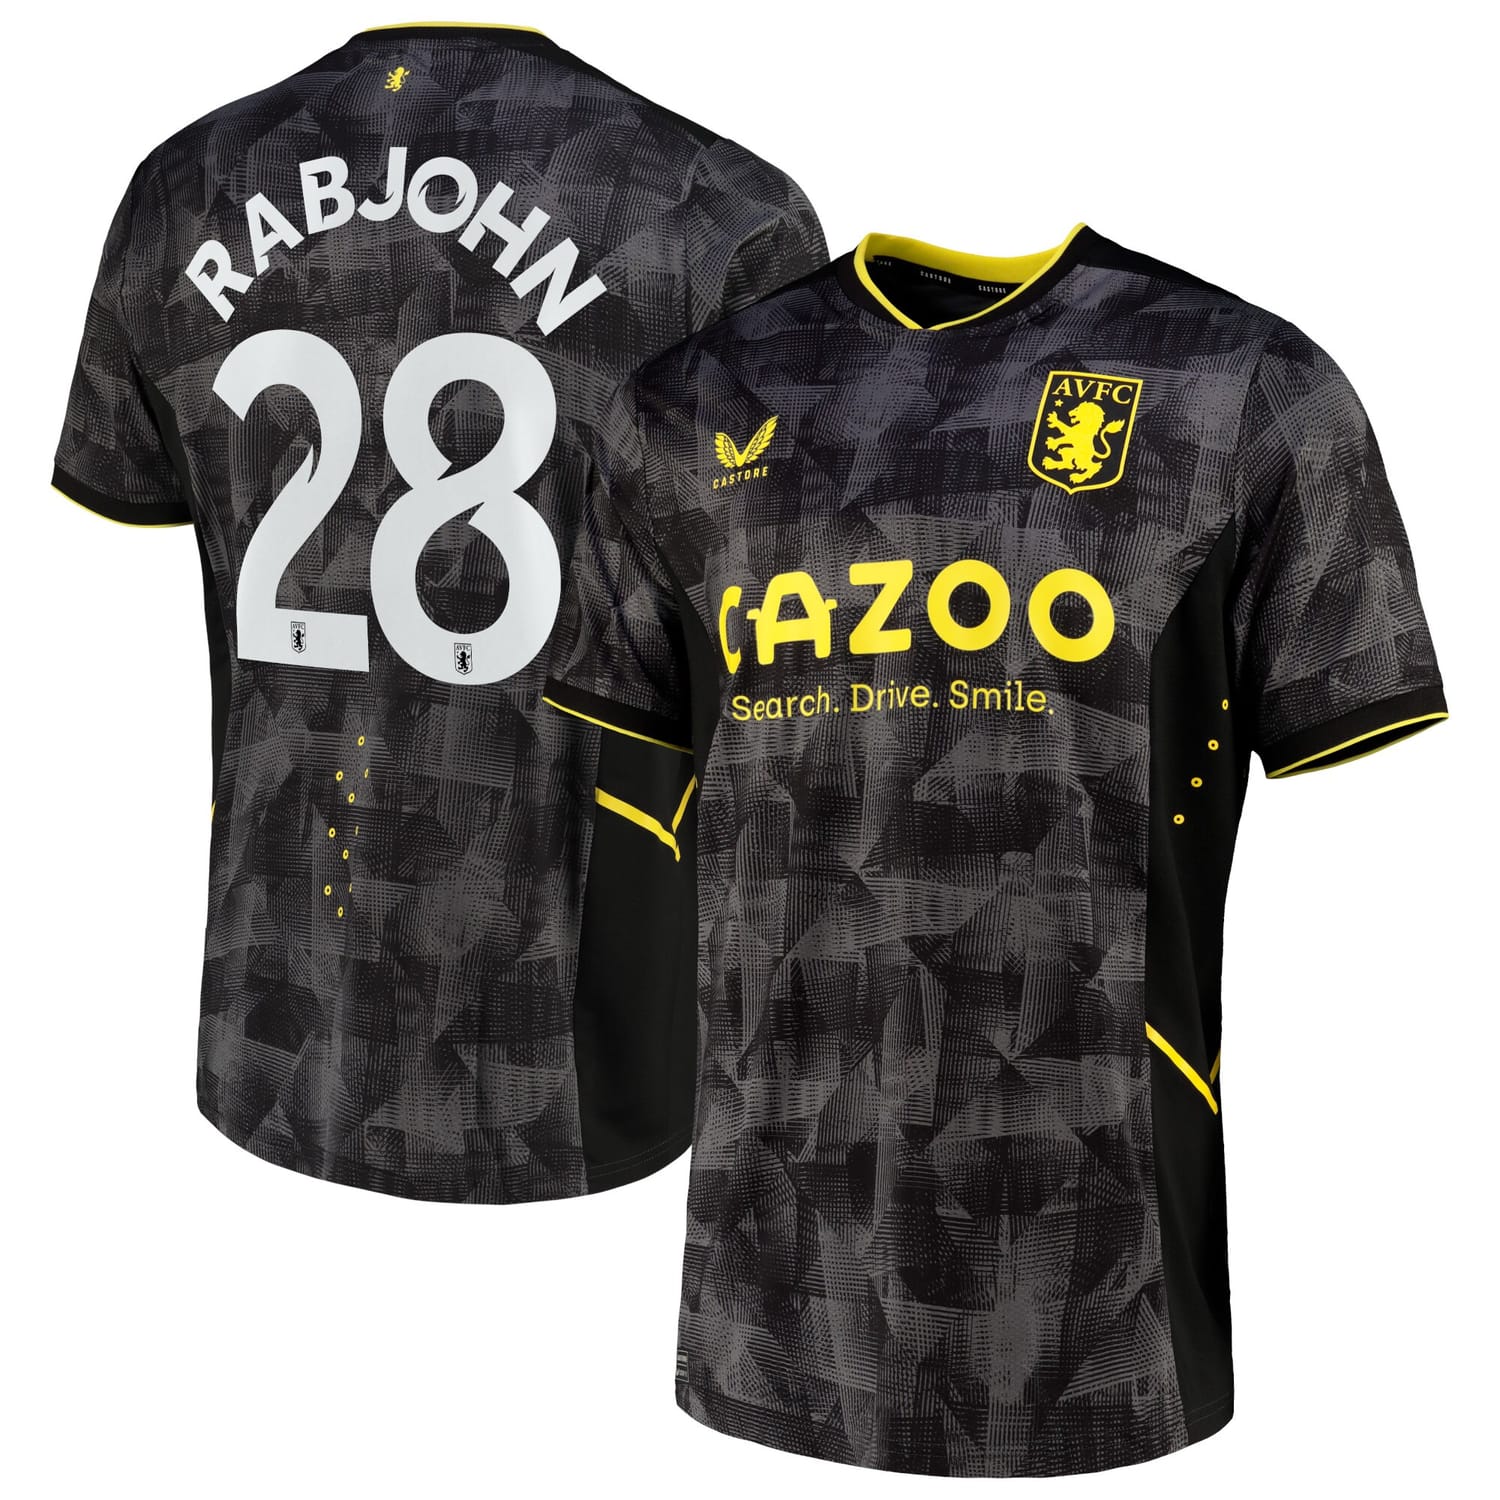 Premier League Aston Villa Third Cup Pro Jersey Shirt 2022-23 player Evie Rabjohn 28 printing for Men